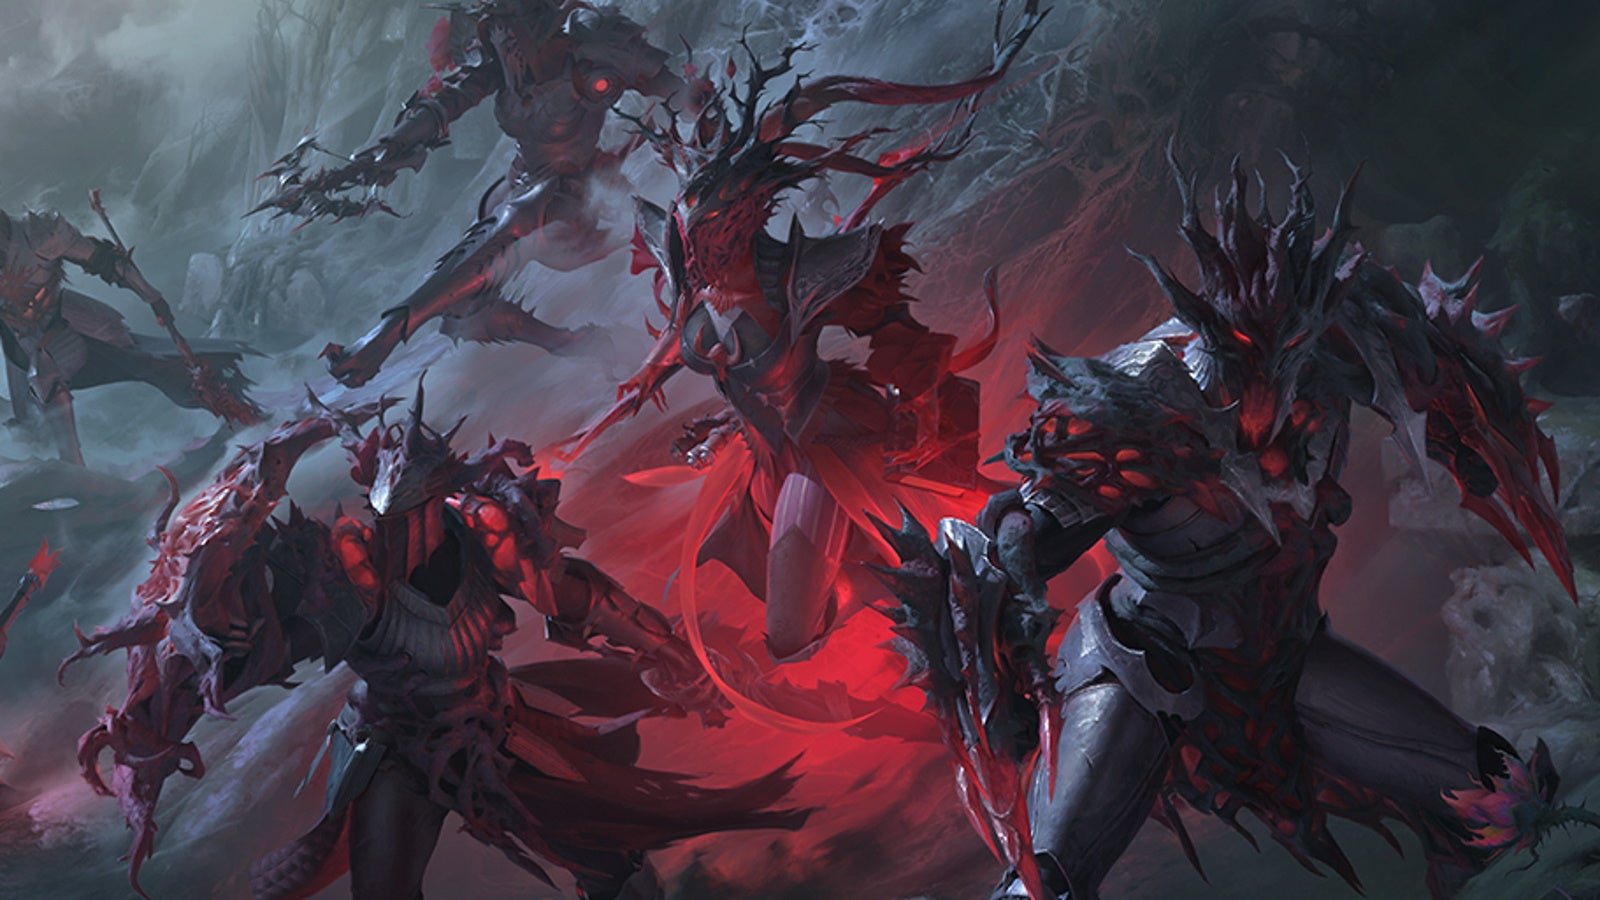 Image for Diablo Immortal Battle Pass Season 2 rewards including rank 40 Empowered rewards